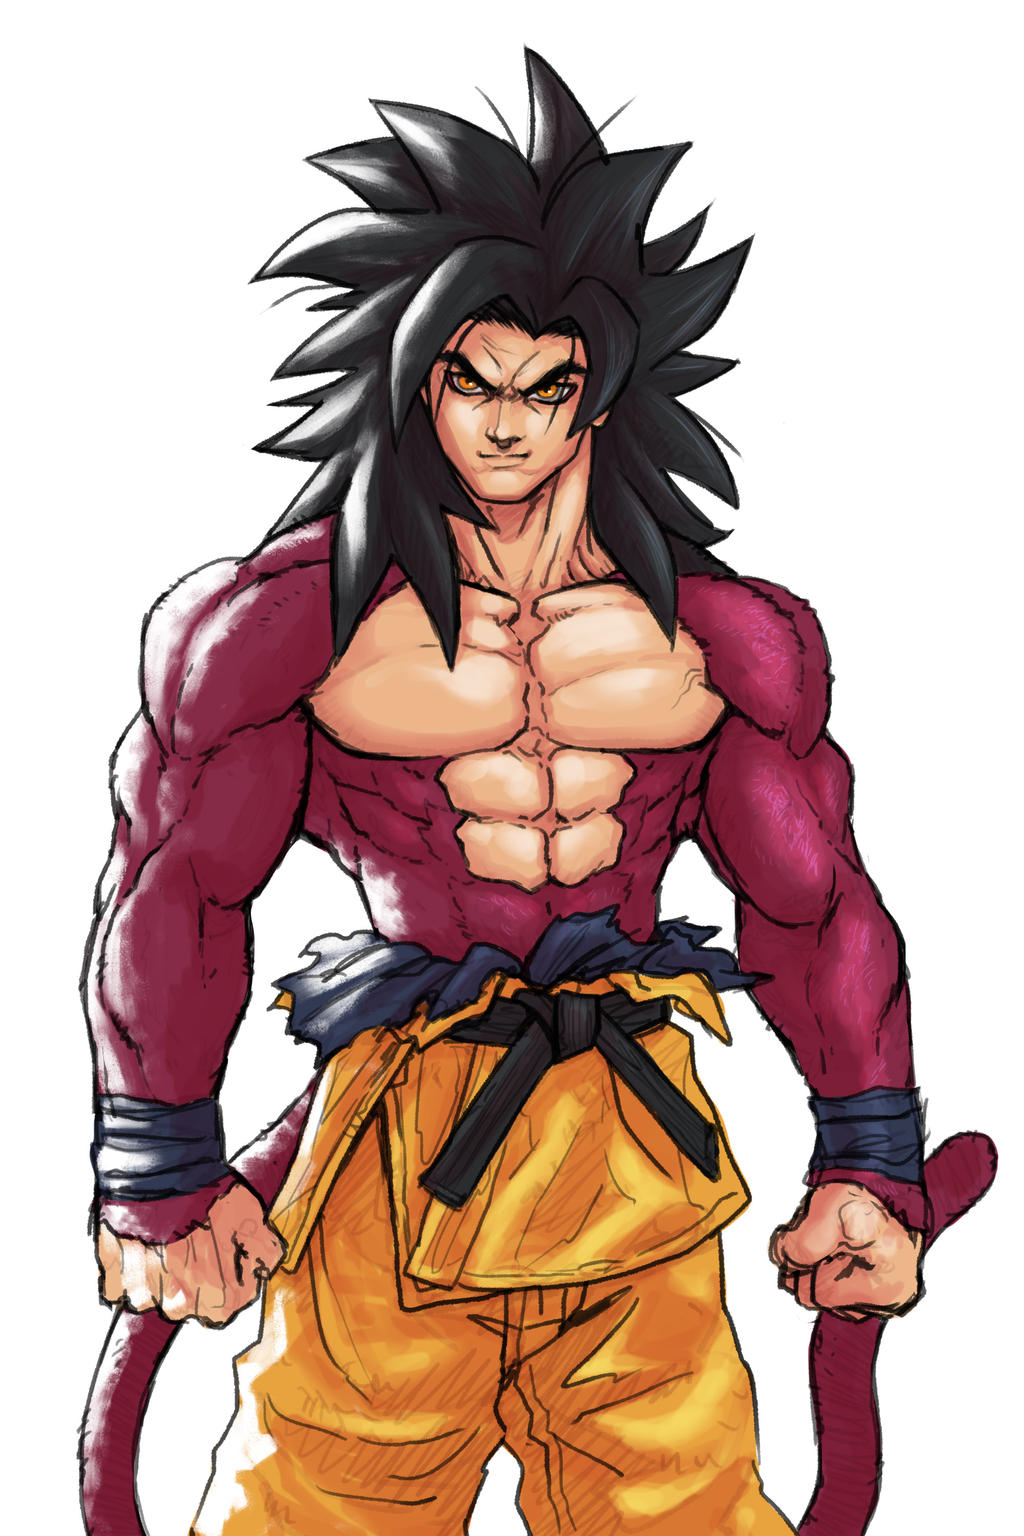 Super saiyan 4 Goku by longai – epicscifiart